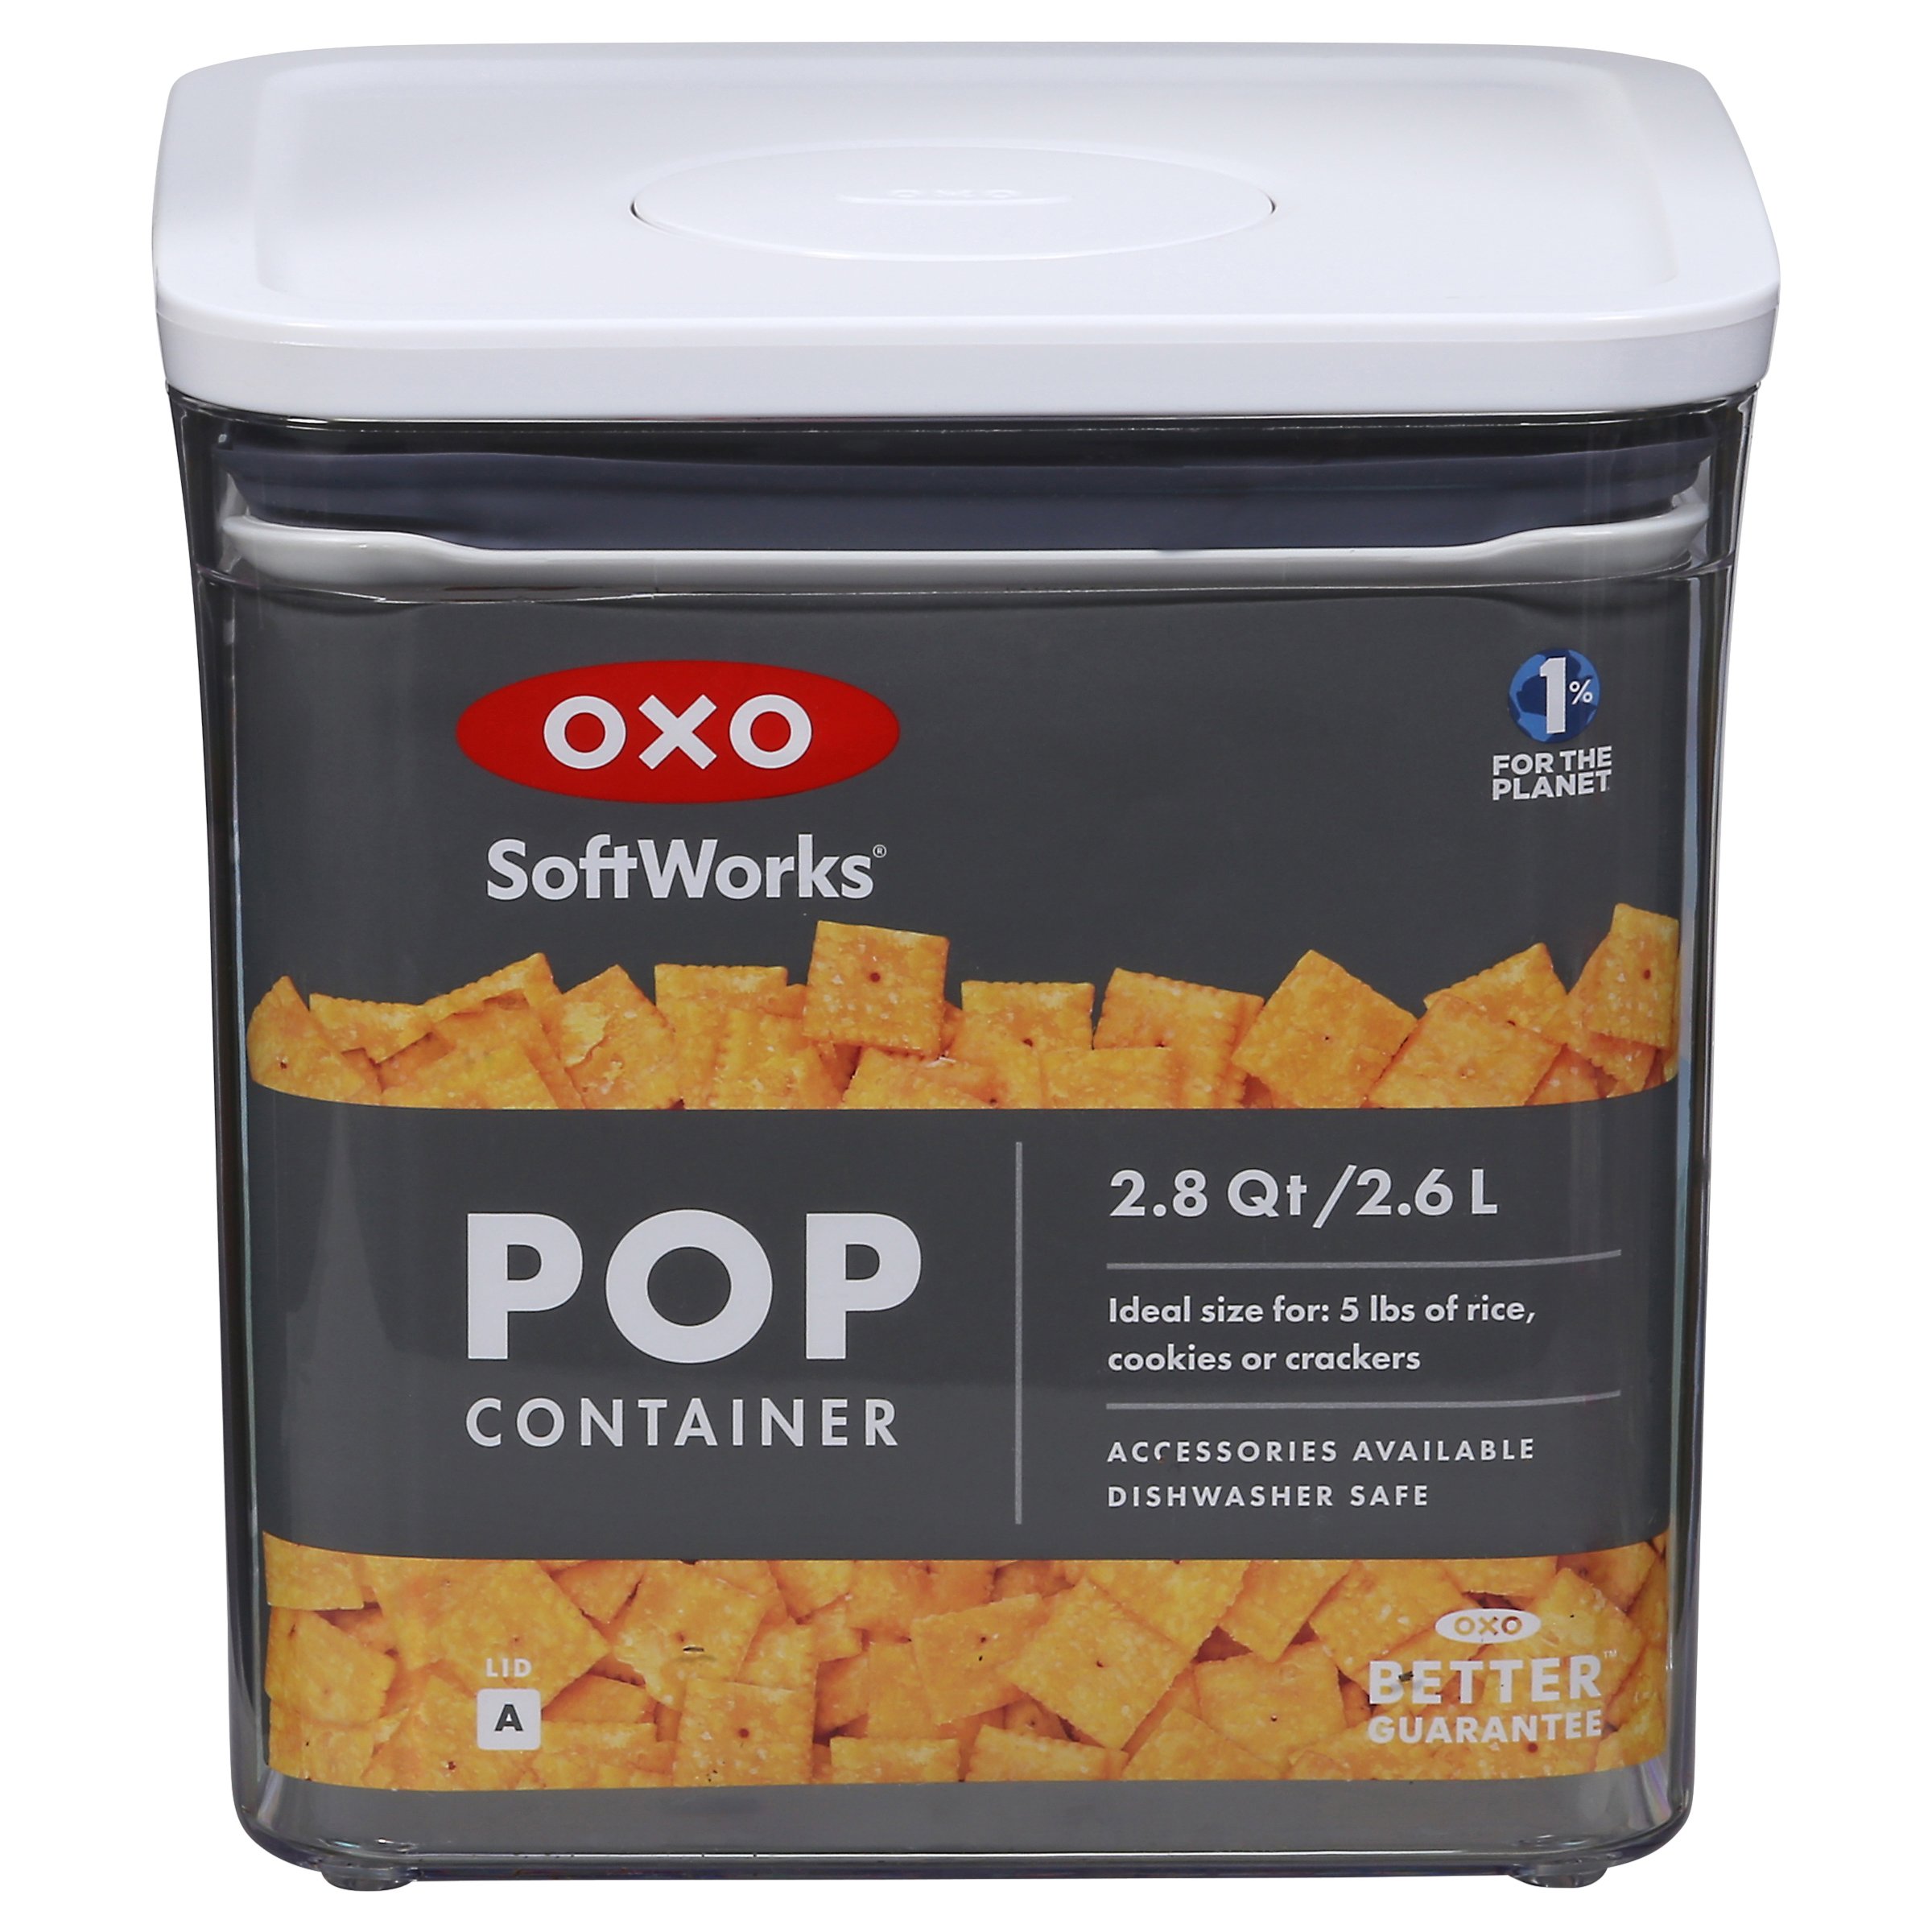 OXO Soft Works Pop Container, 4.3 Qt, Shop